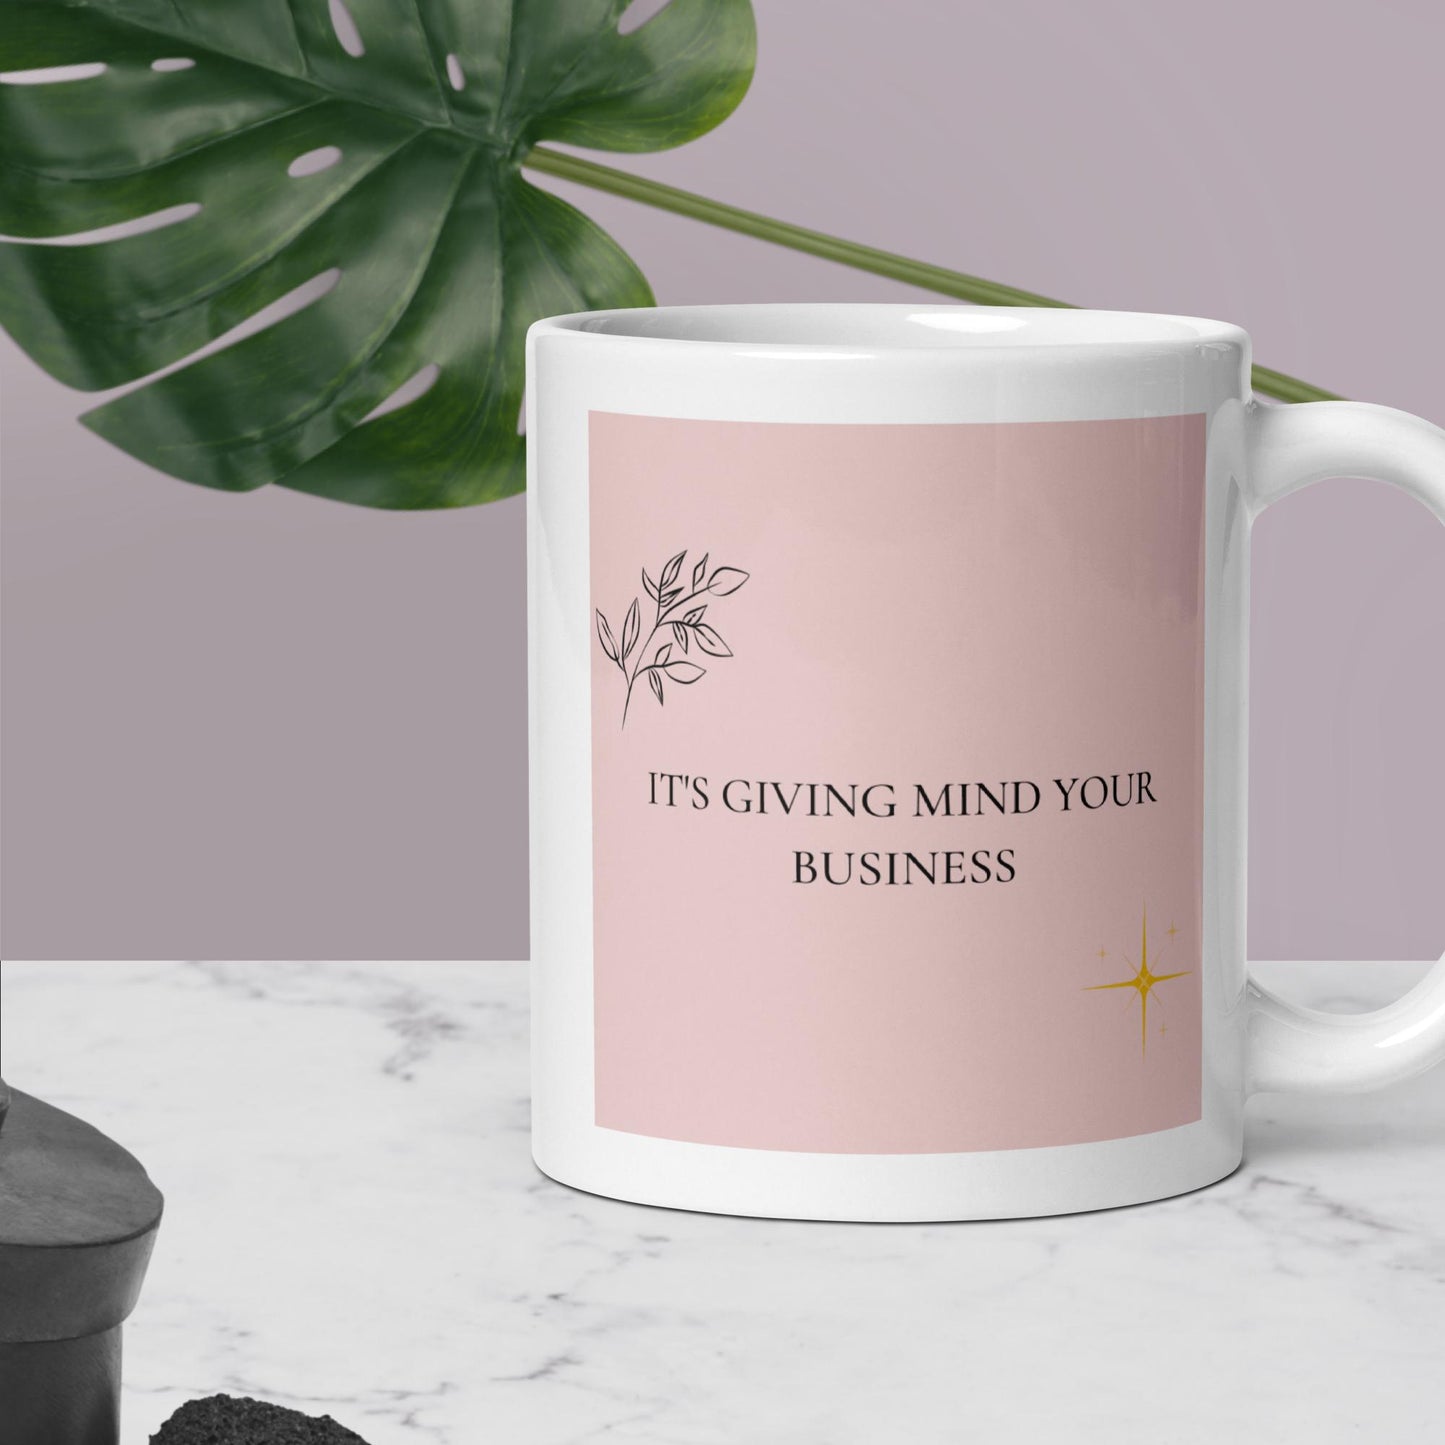 MIND YOUR BUSINESS White glossy mug